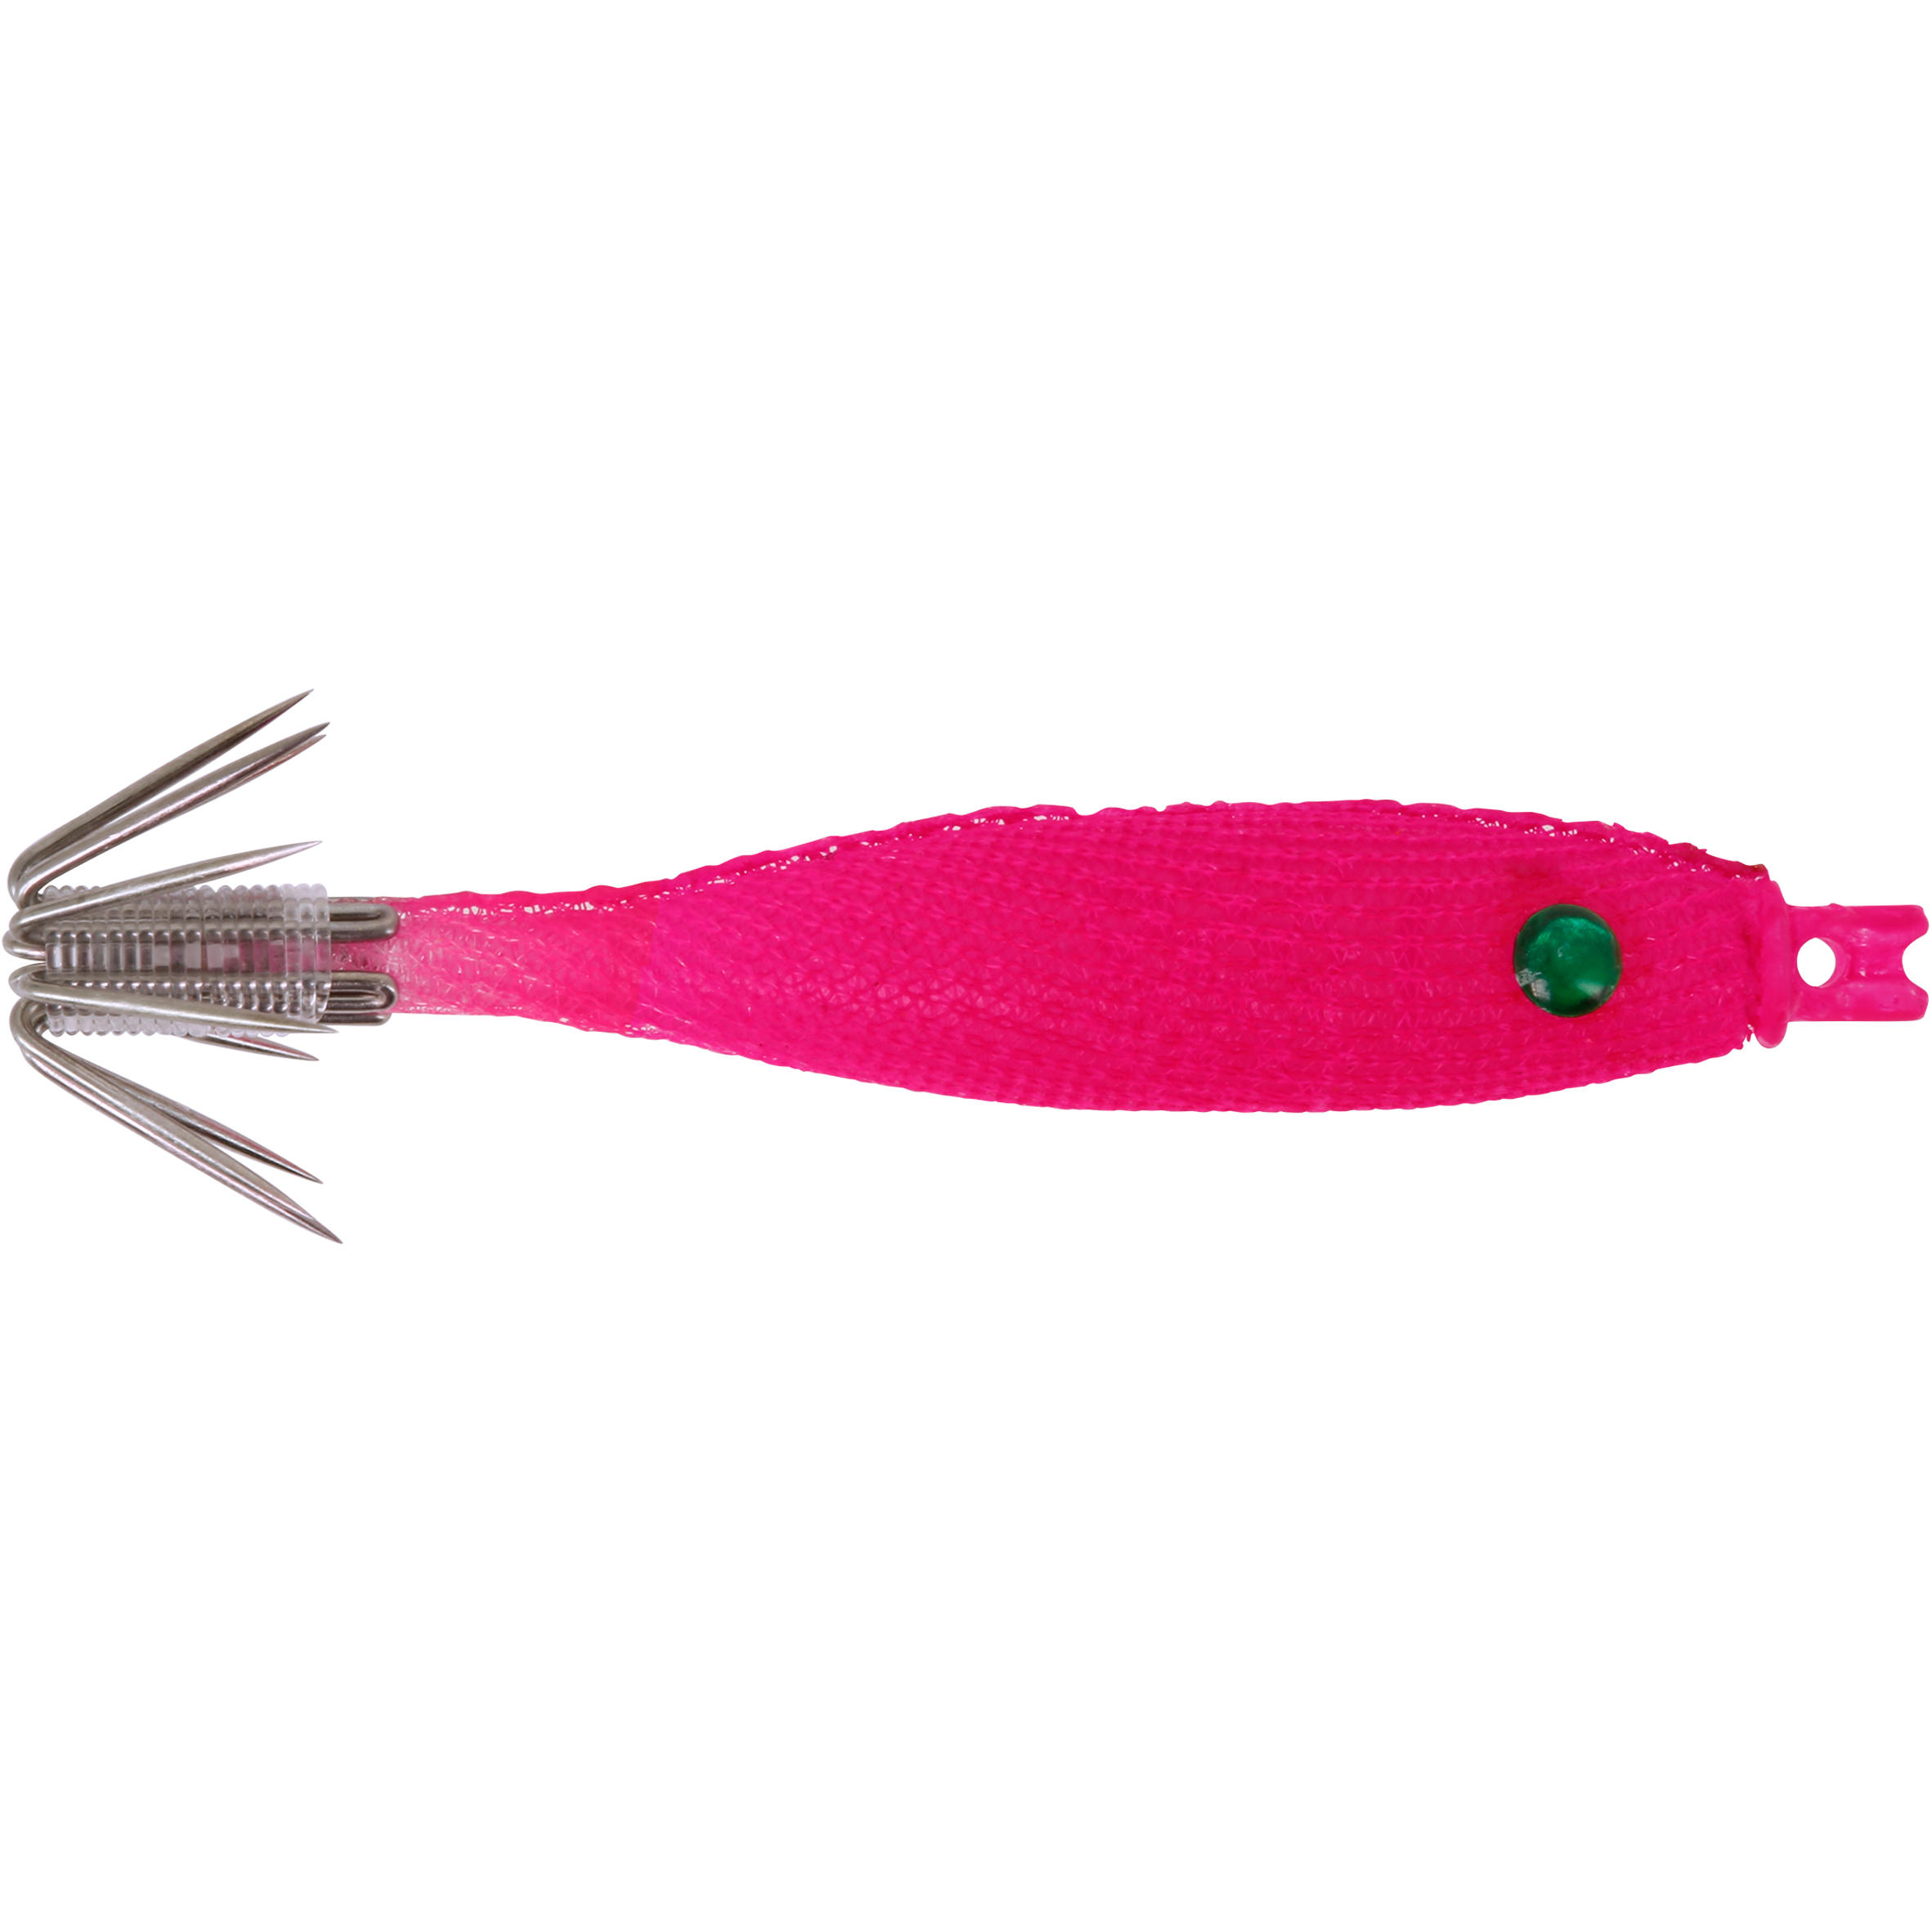 EBIKA soft 1.8 50 pink cuttlefish/squid fishing jig 2/10